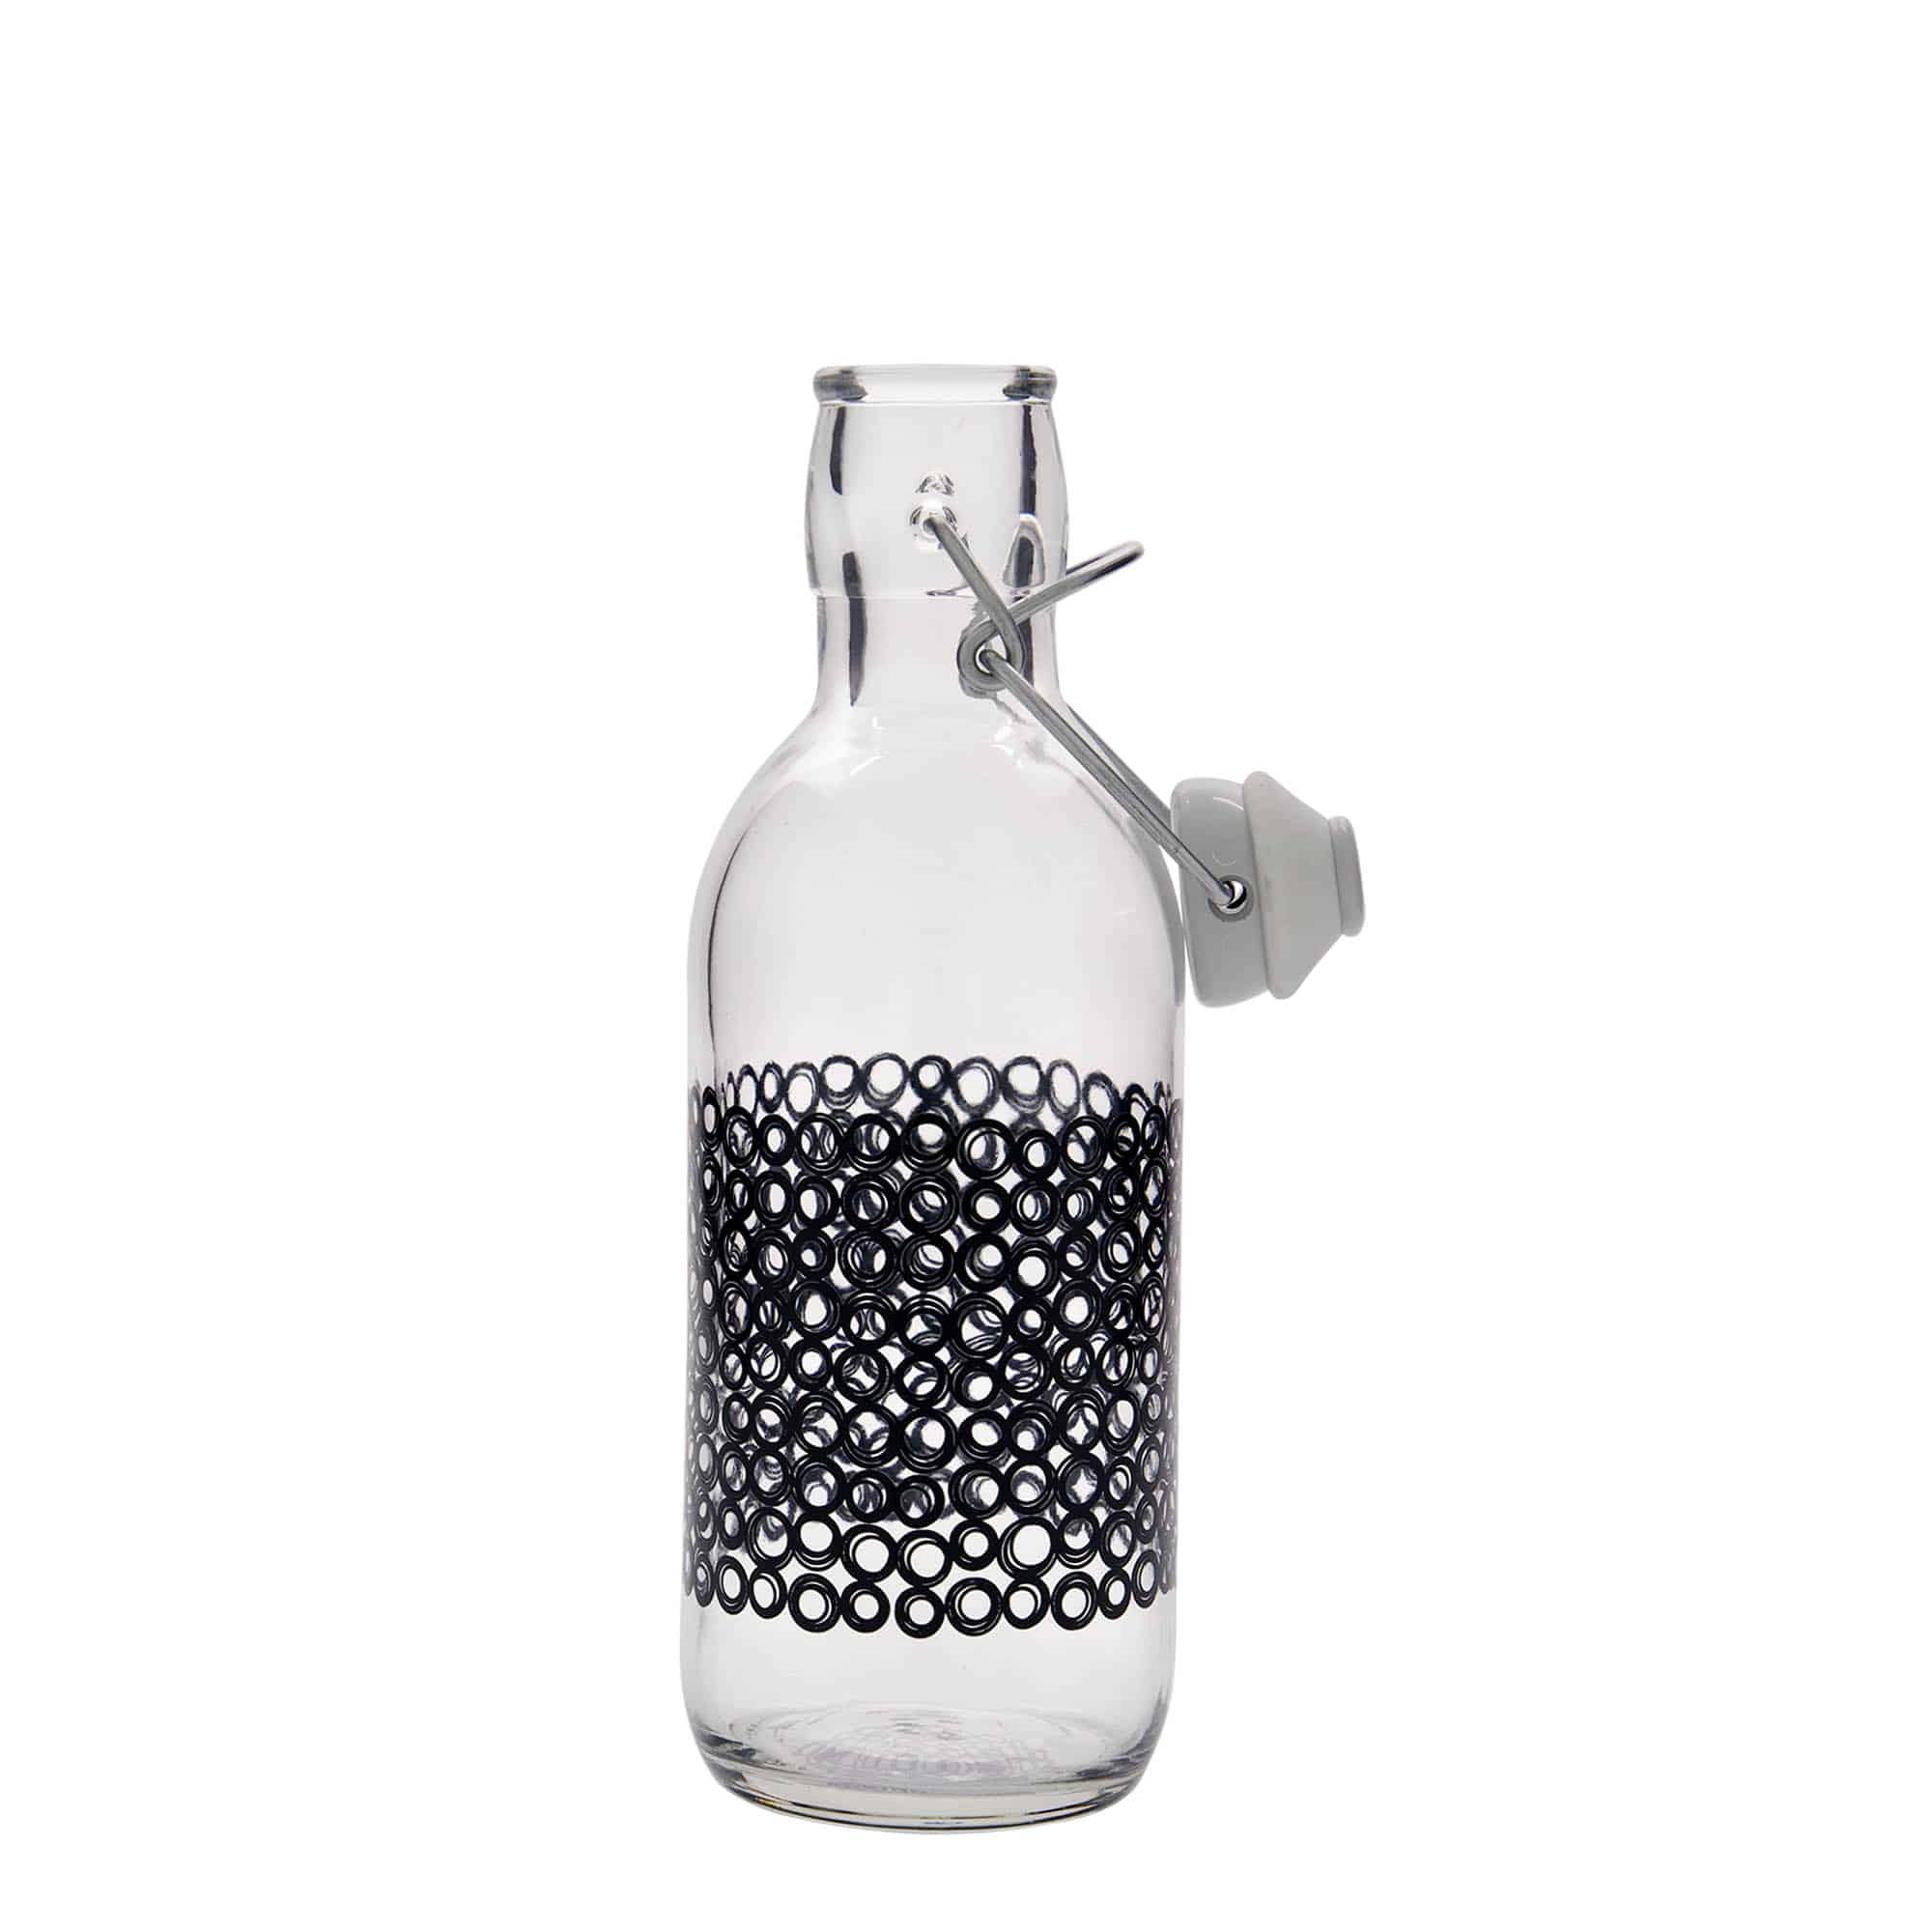 500 ml glass bottle 'Emilia', print: circola nero, closure: swing top